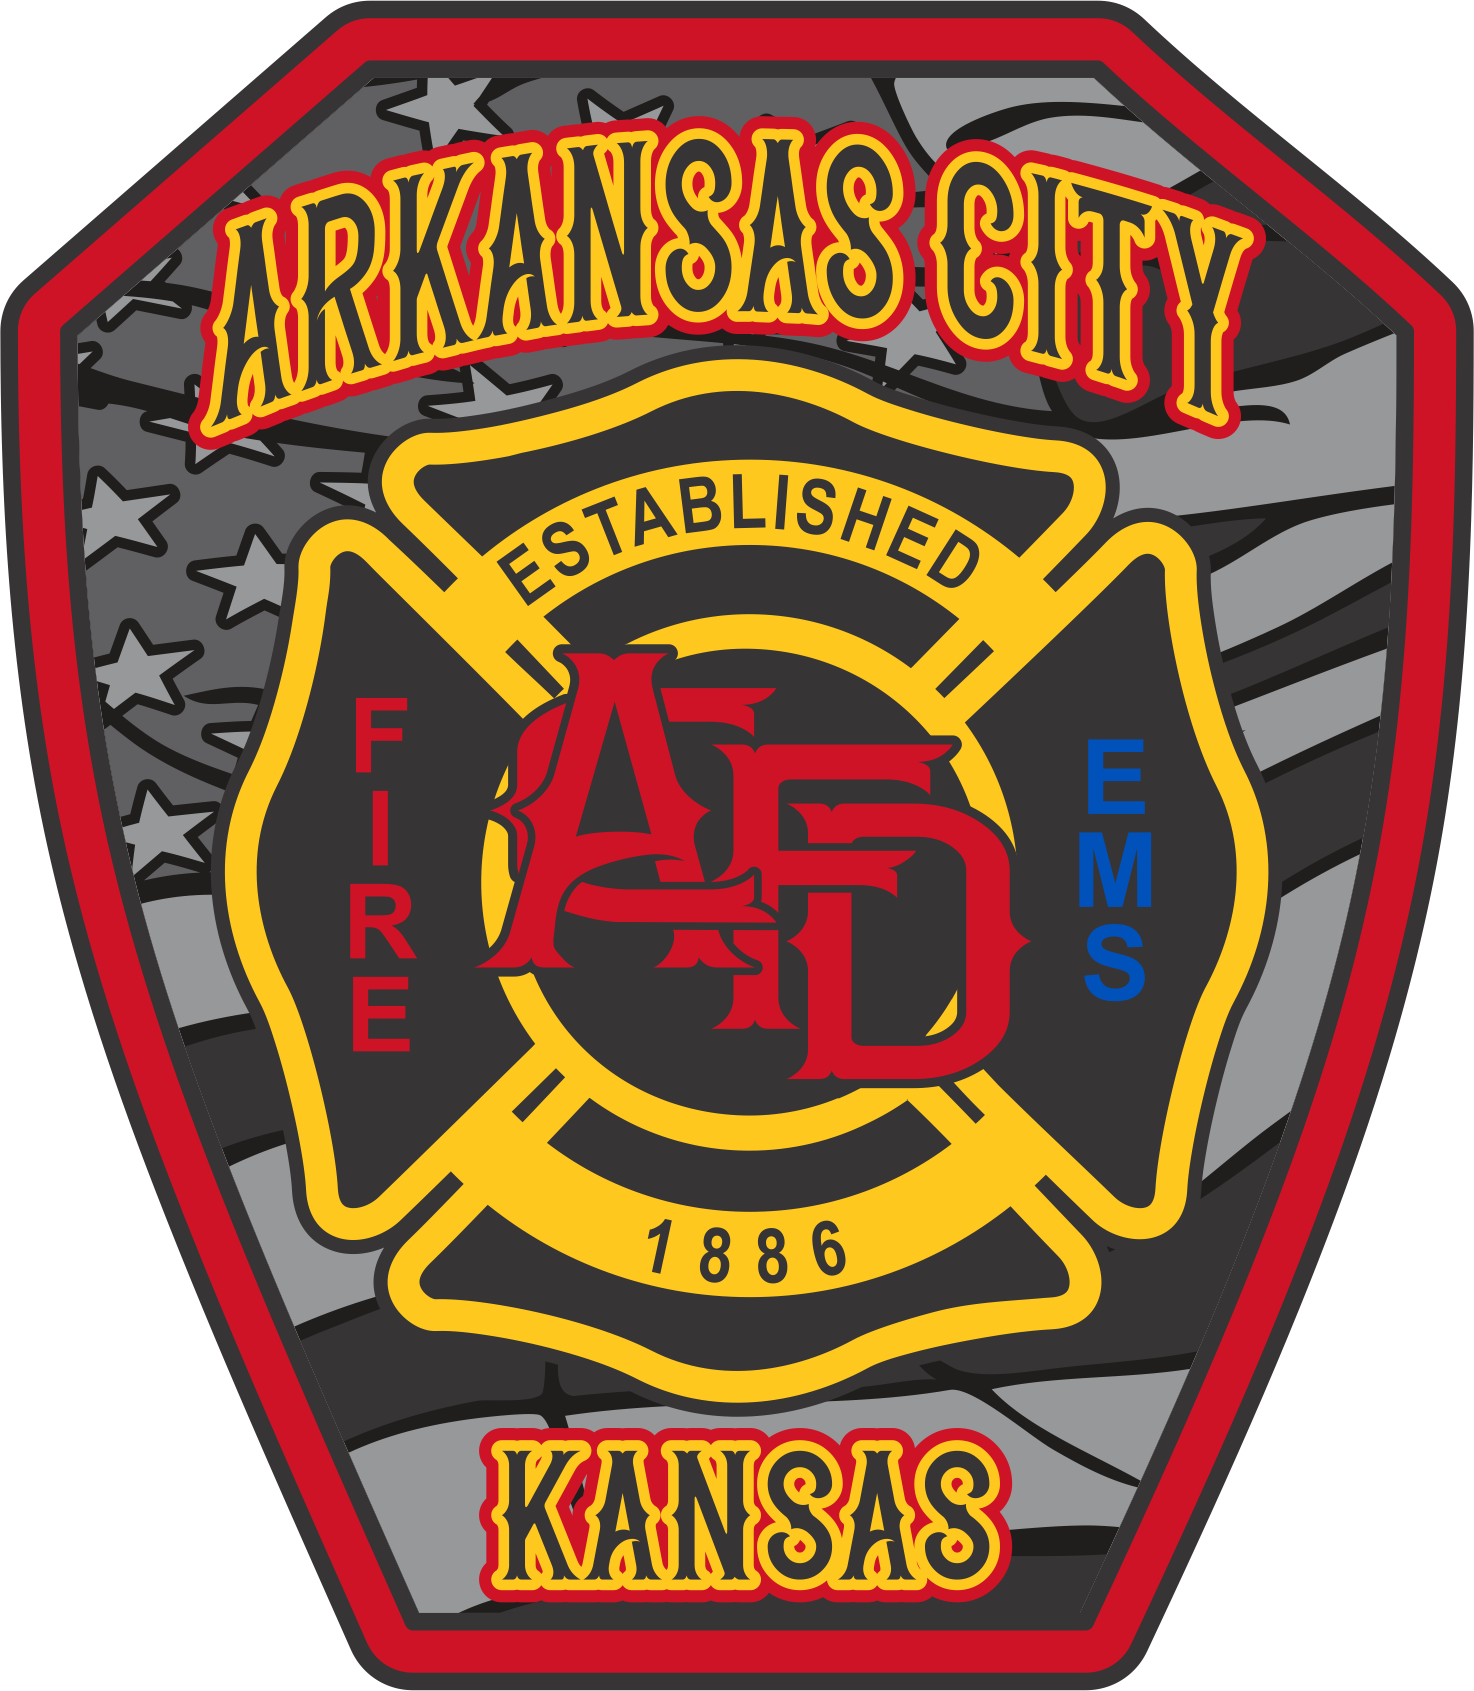 Arkansas City Fire-EMS logo